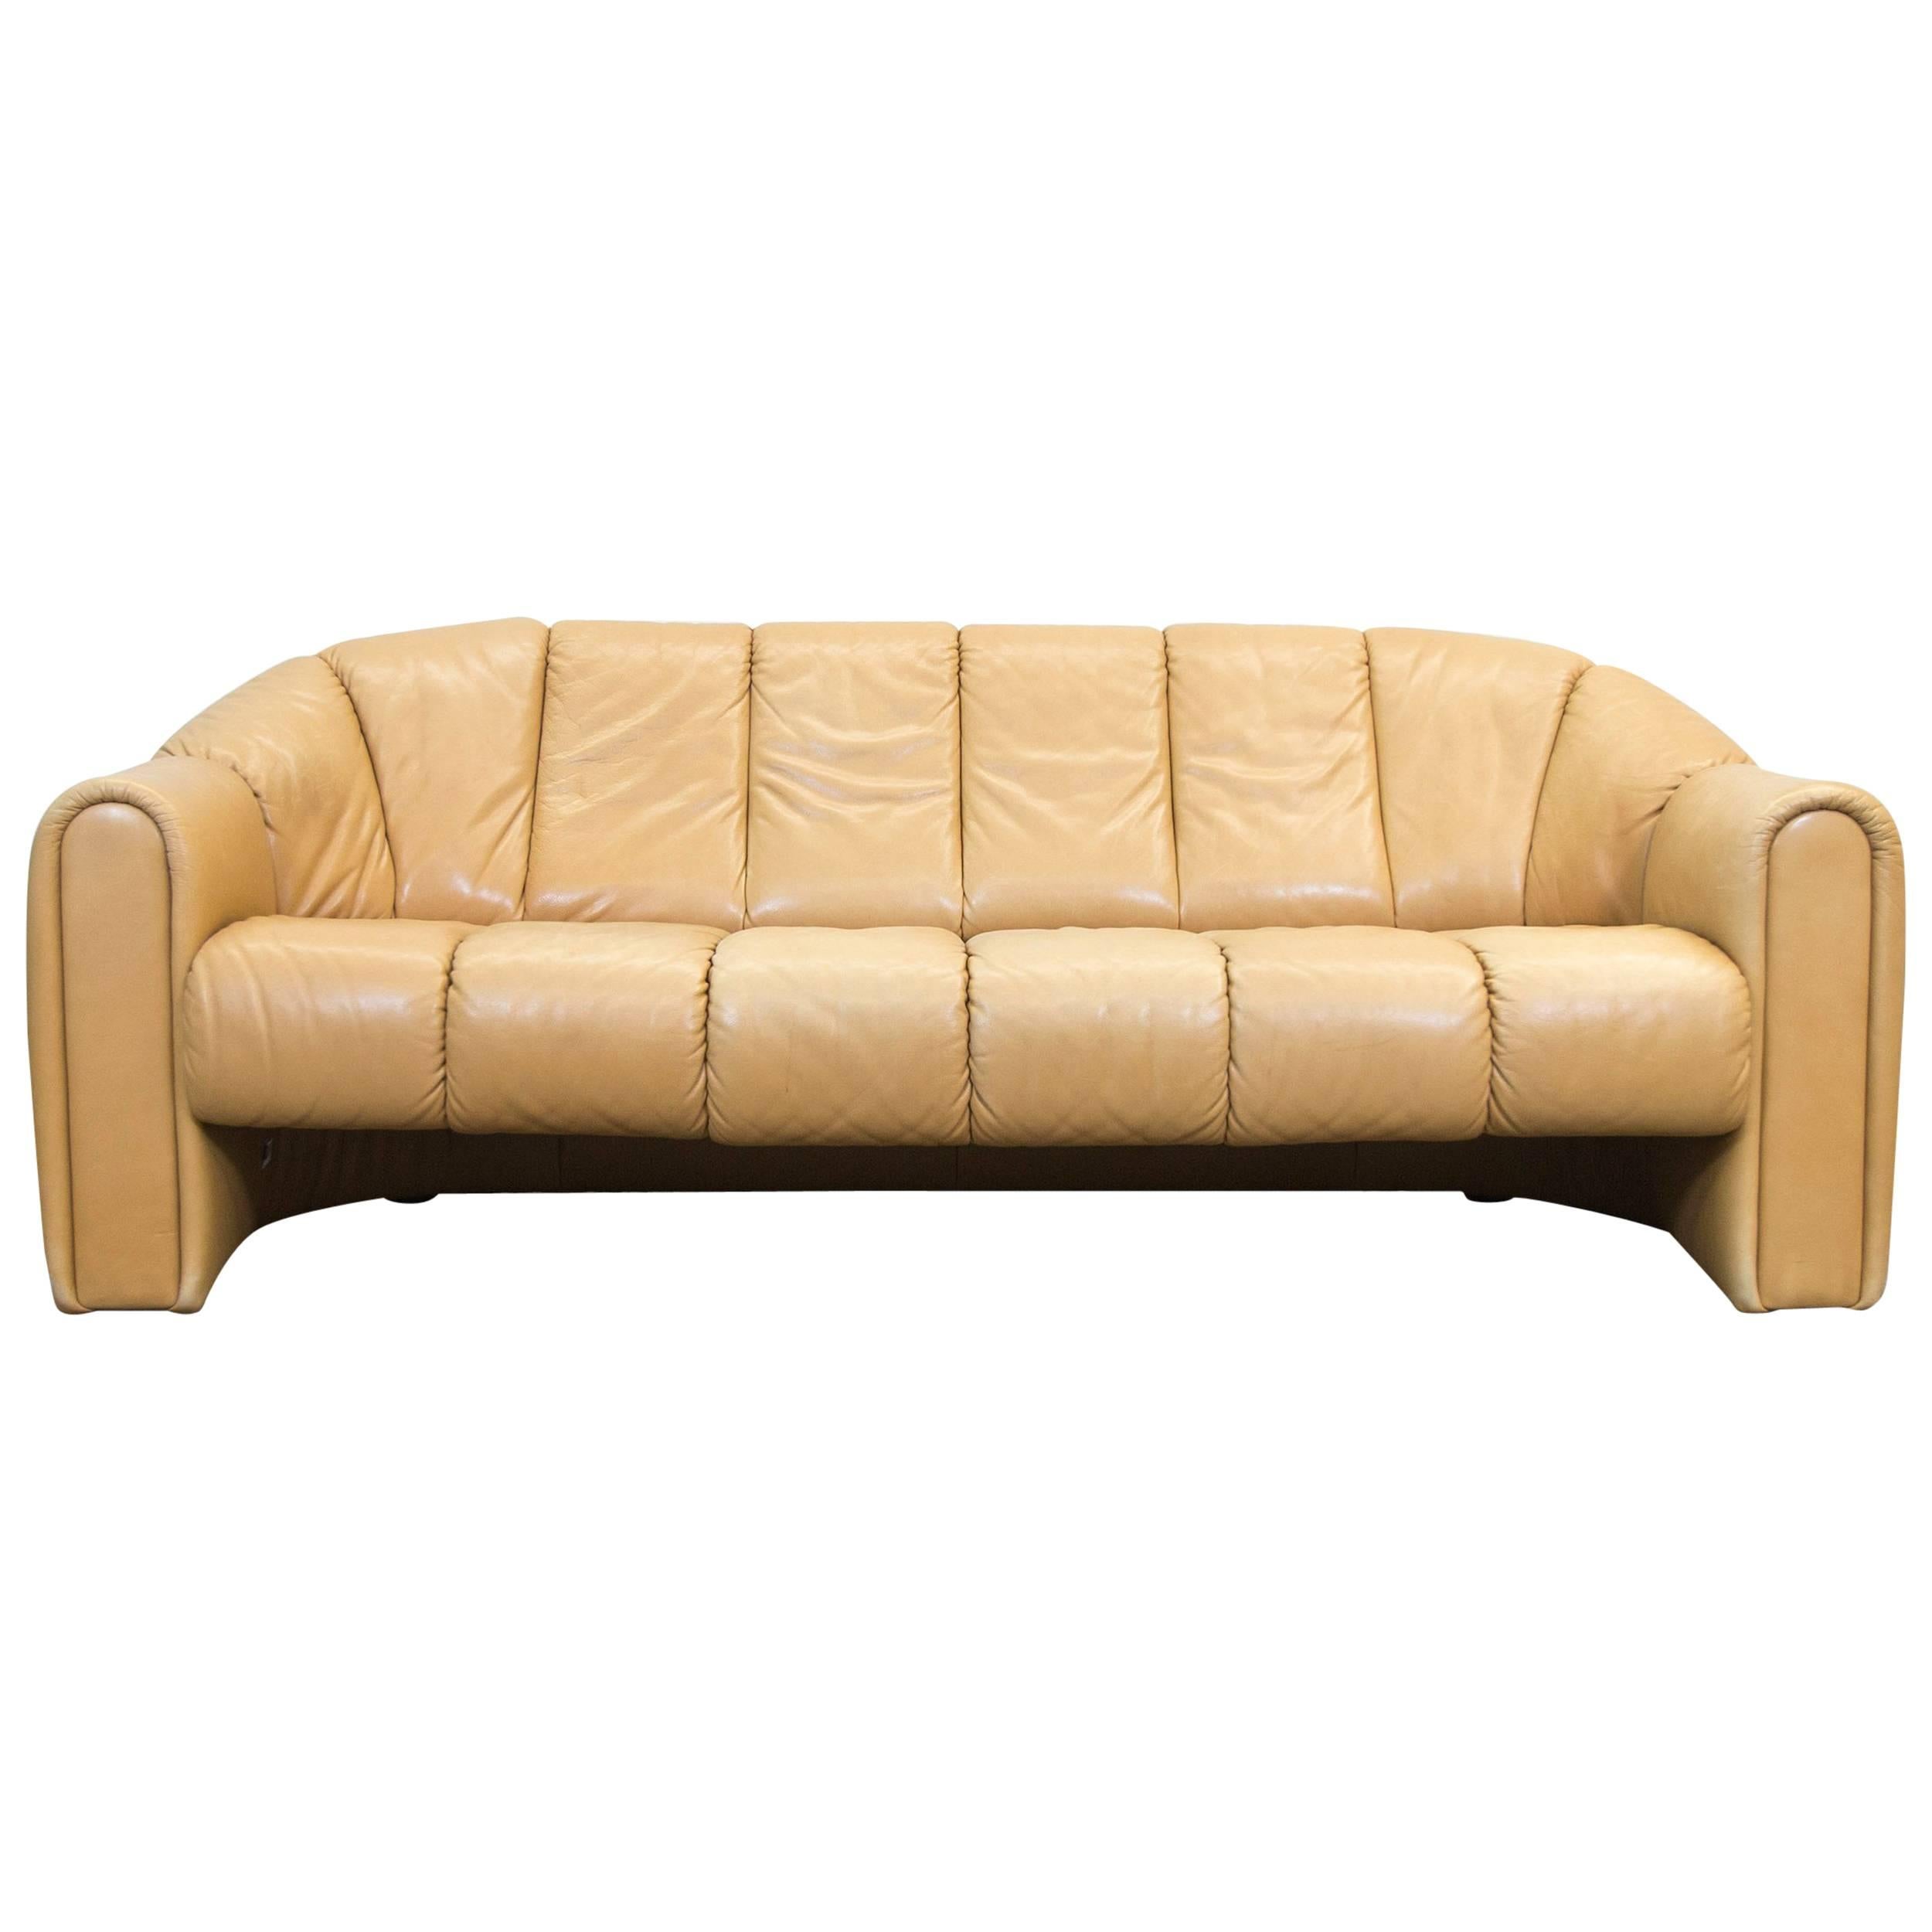 COR Designer Leather Sofa Brown Three-Seat Couch Vintage Retro